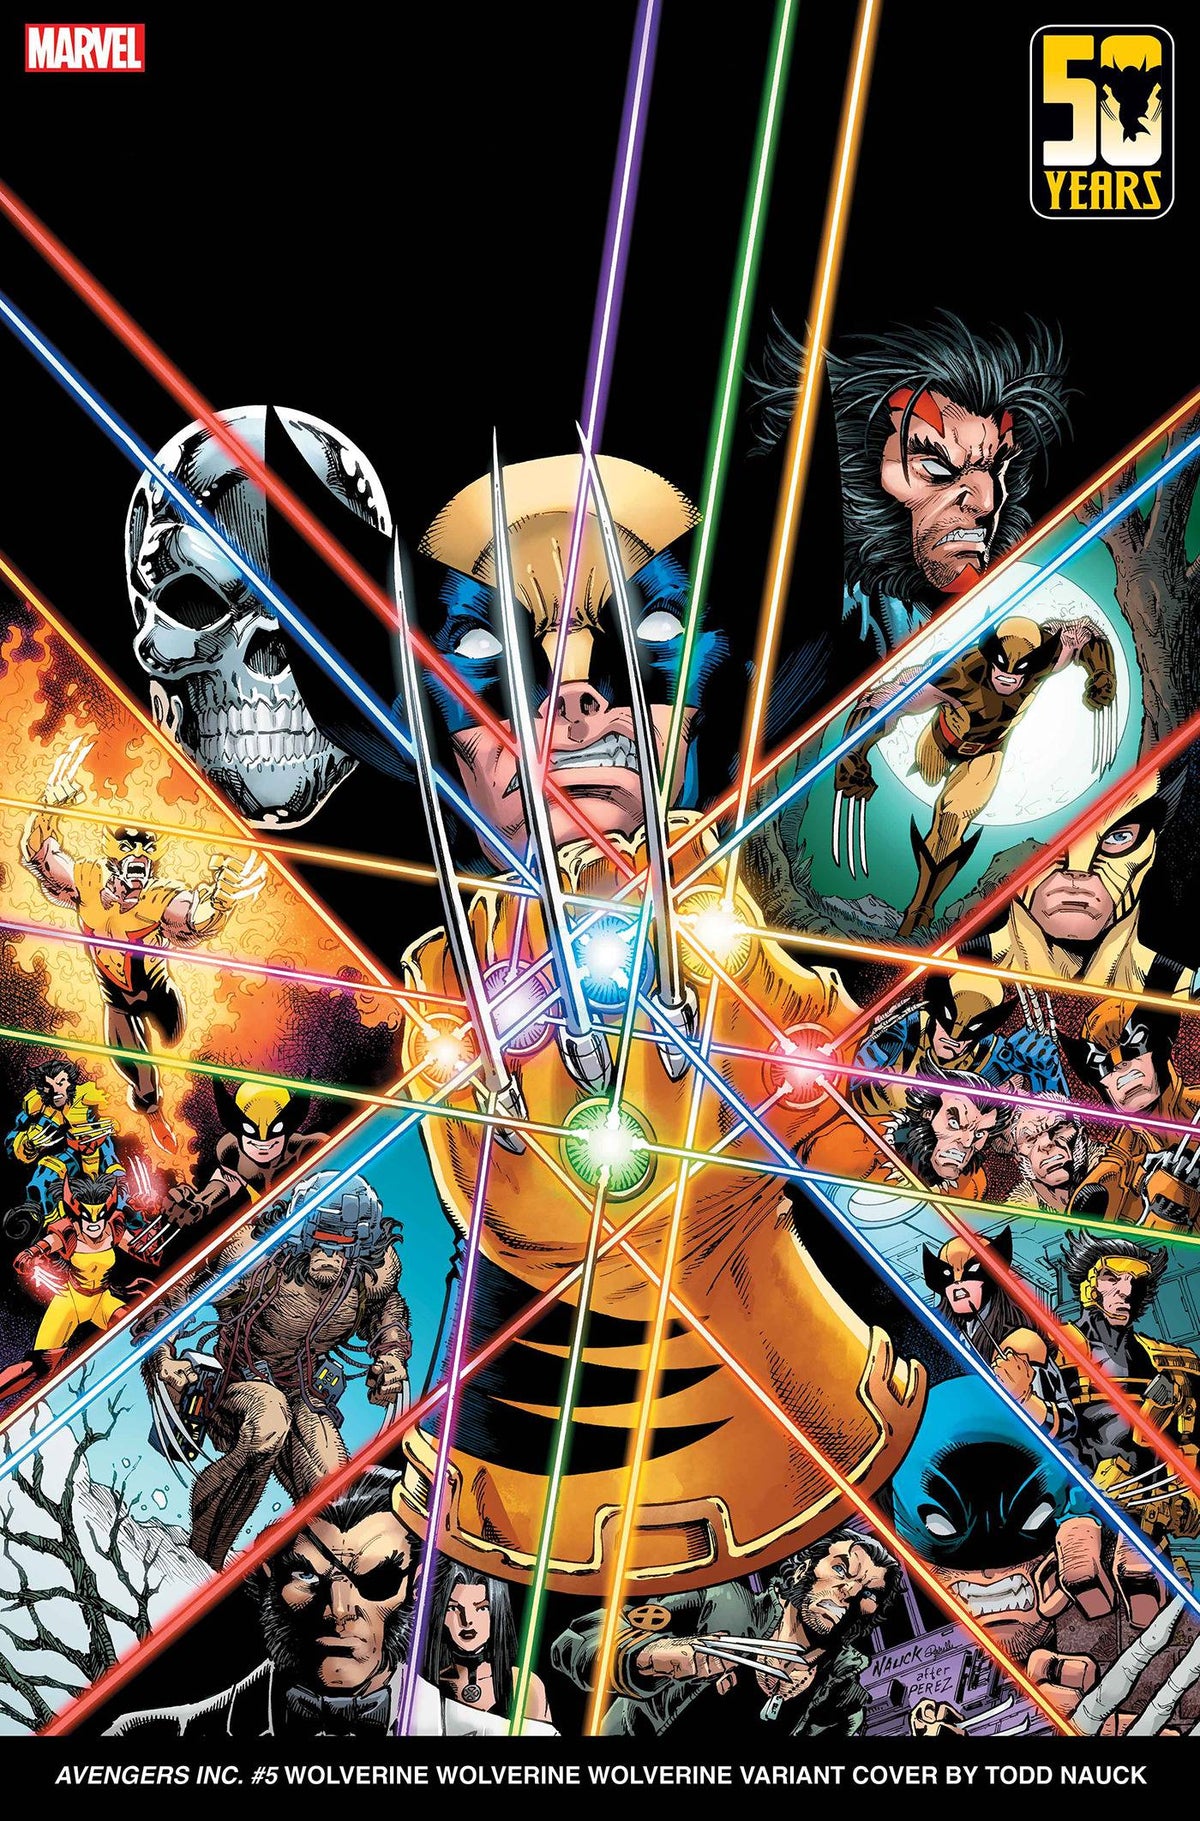 Avengers Inc #5 Todd Nauck Wolverine Wolverine Wolverine Var - State of Comics